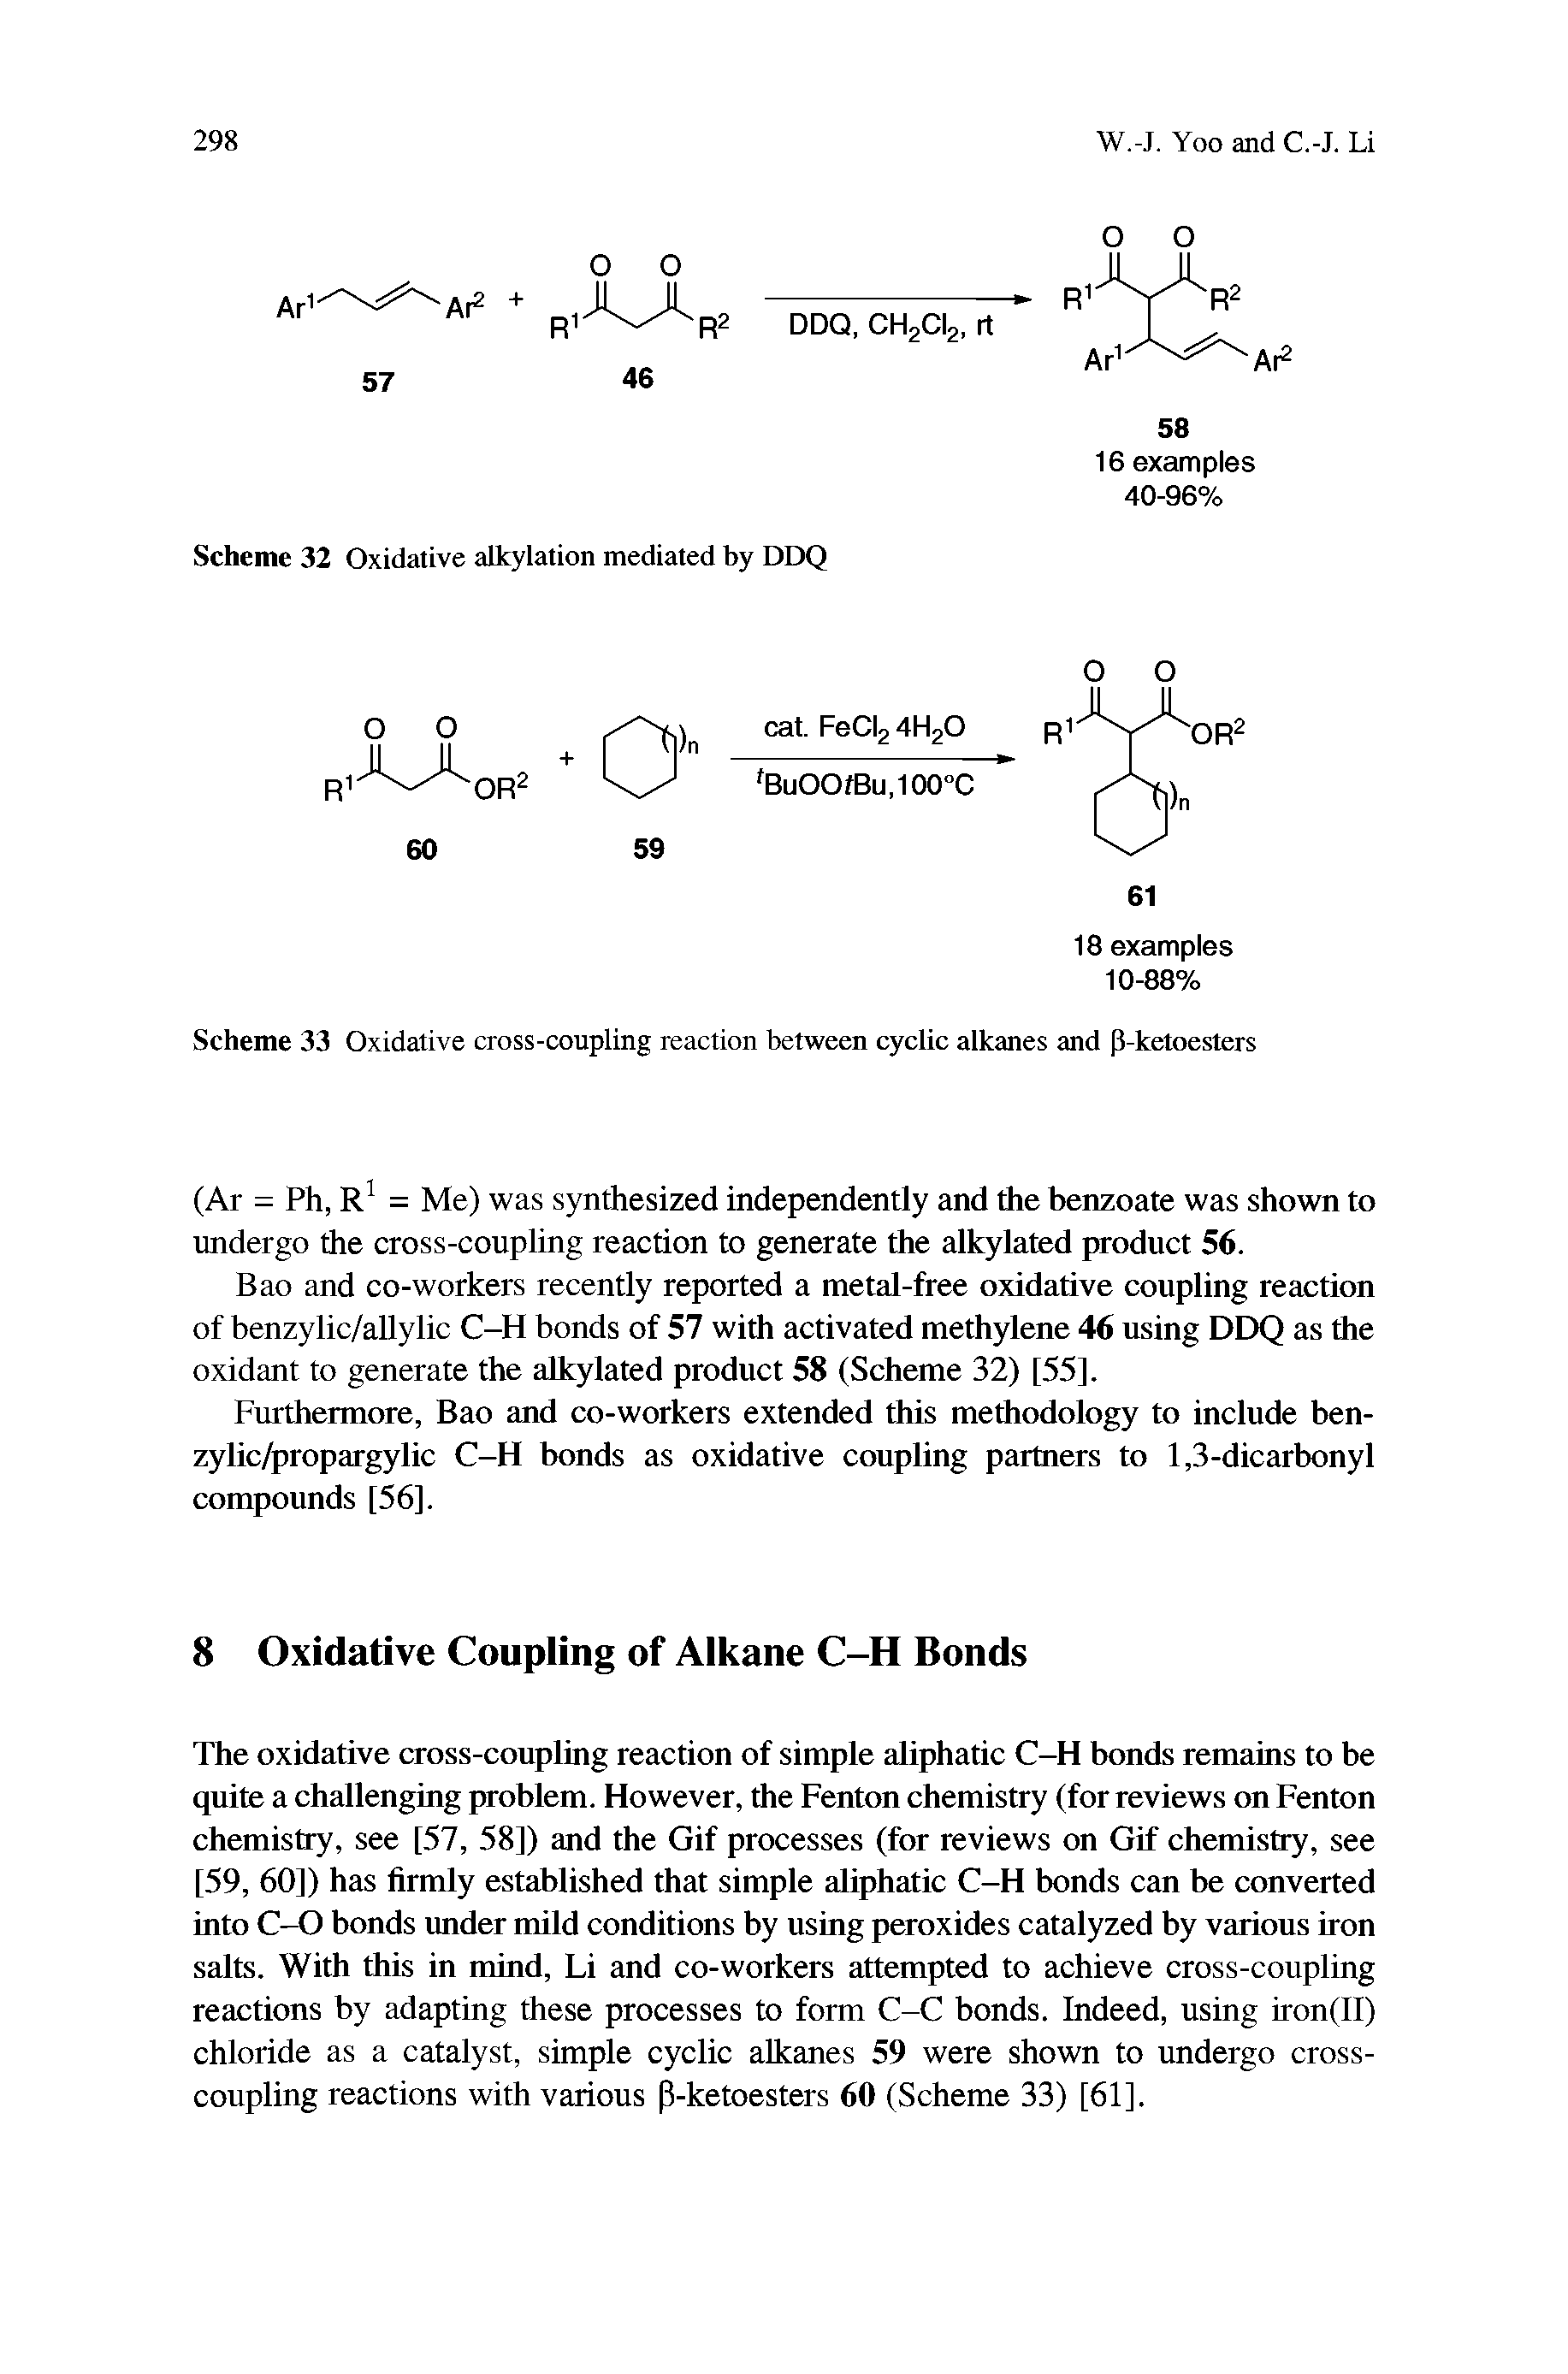 Scheme 33 Oxidative cross-coupling reaction between cyclic alkanes and P-ketoesters...